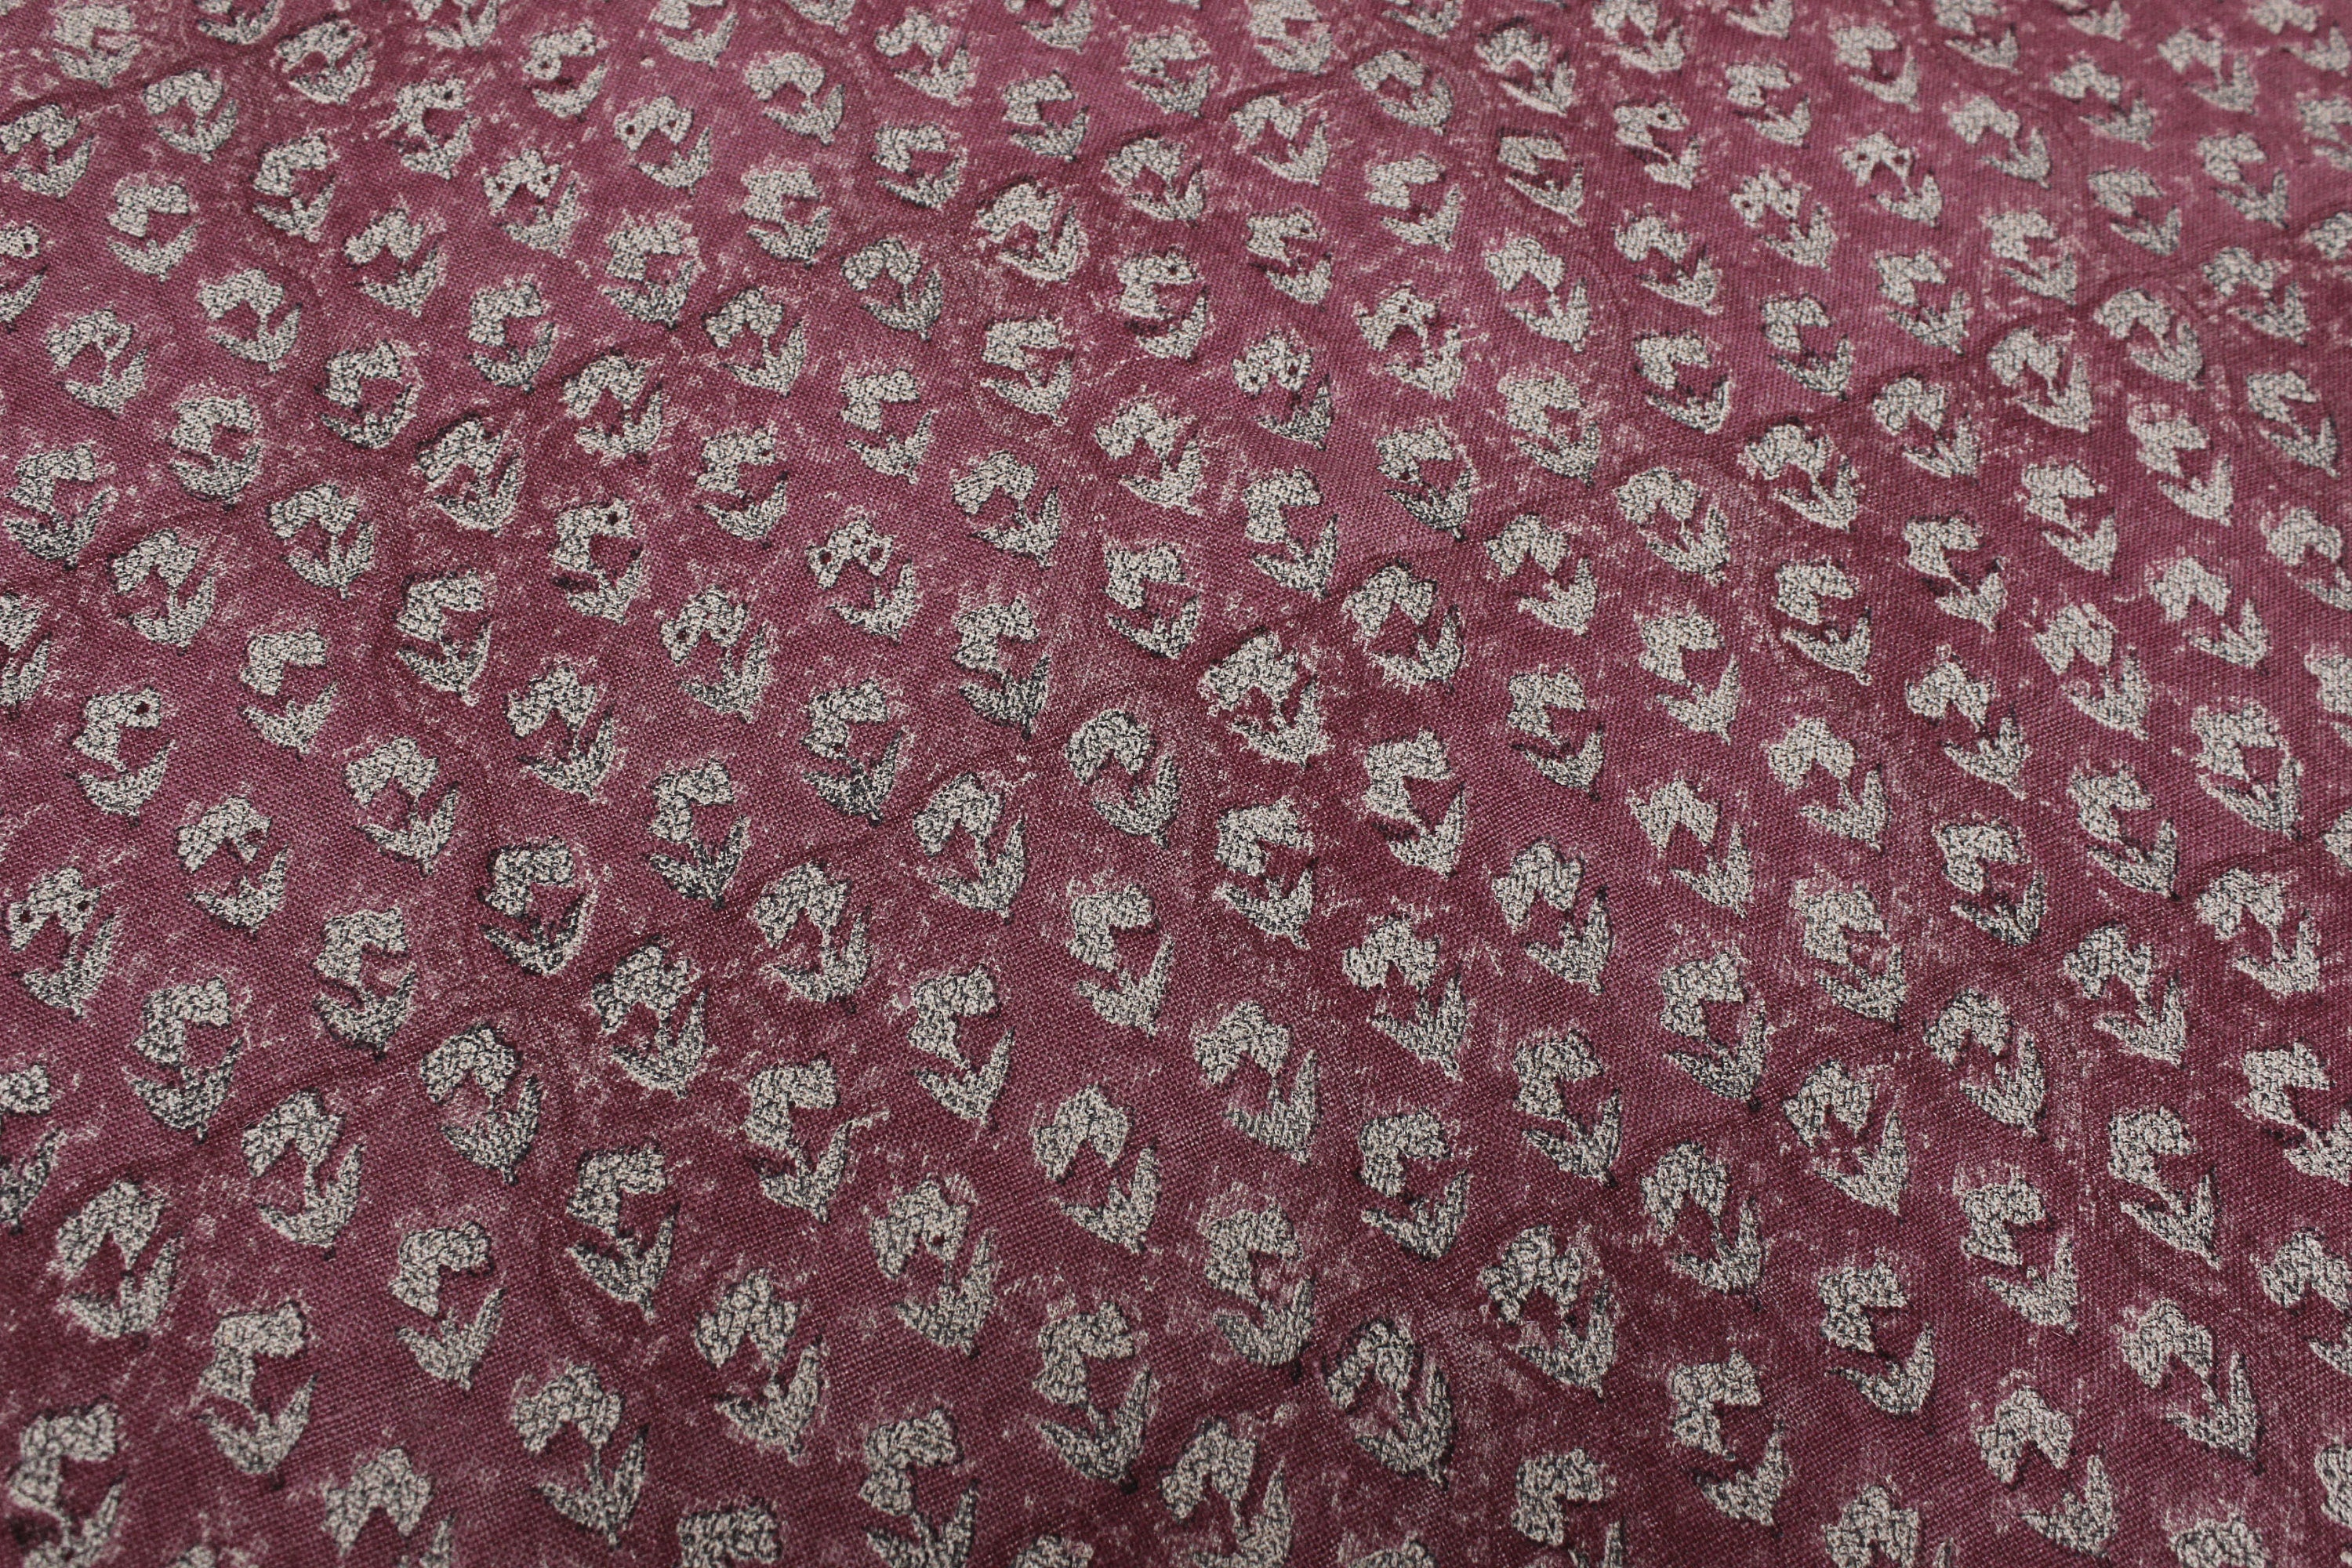 Block Print Linen Fabric, Superstar Pink Popular Floral Hand Block Print Fabric  Thick Linen 58"Inch Wide Heavy Weight 300 Gsm, Upholstery,Indian Art Print Fabric